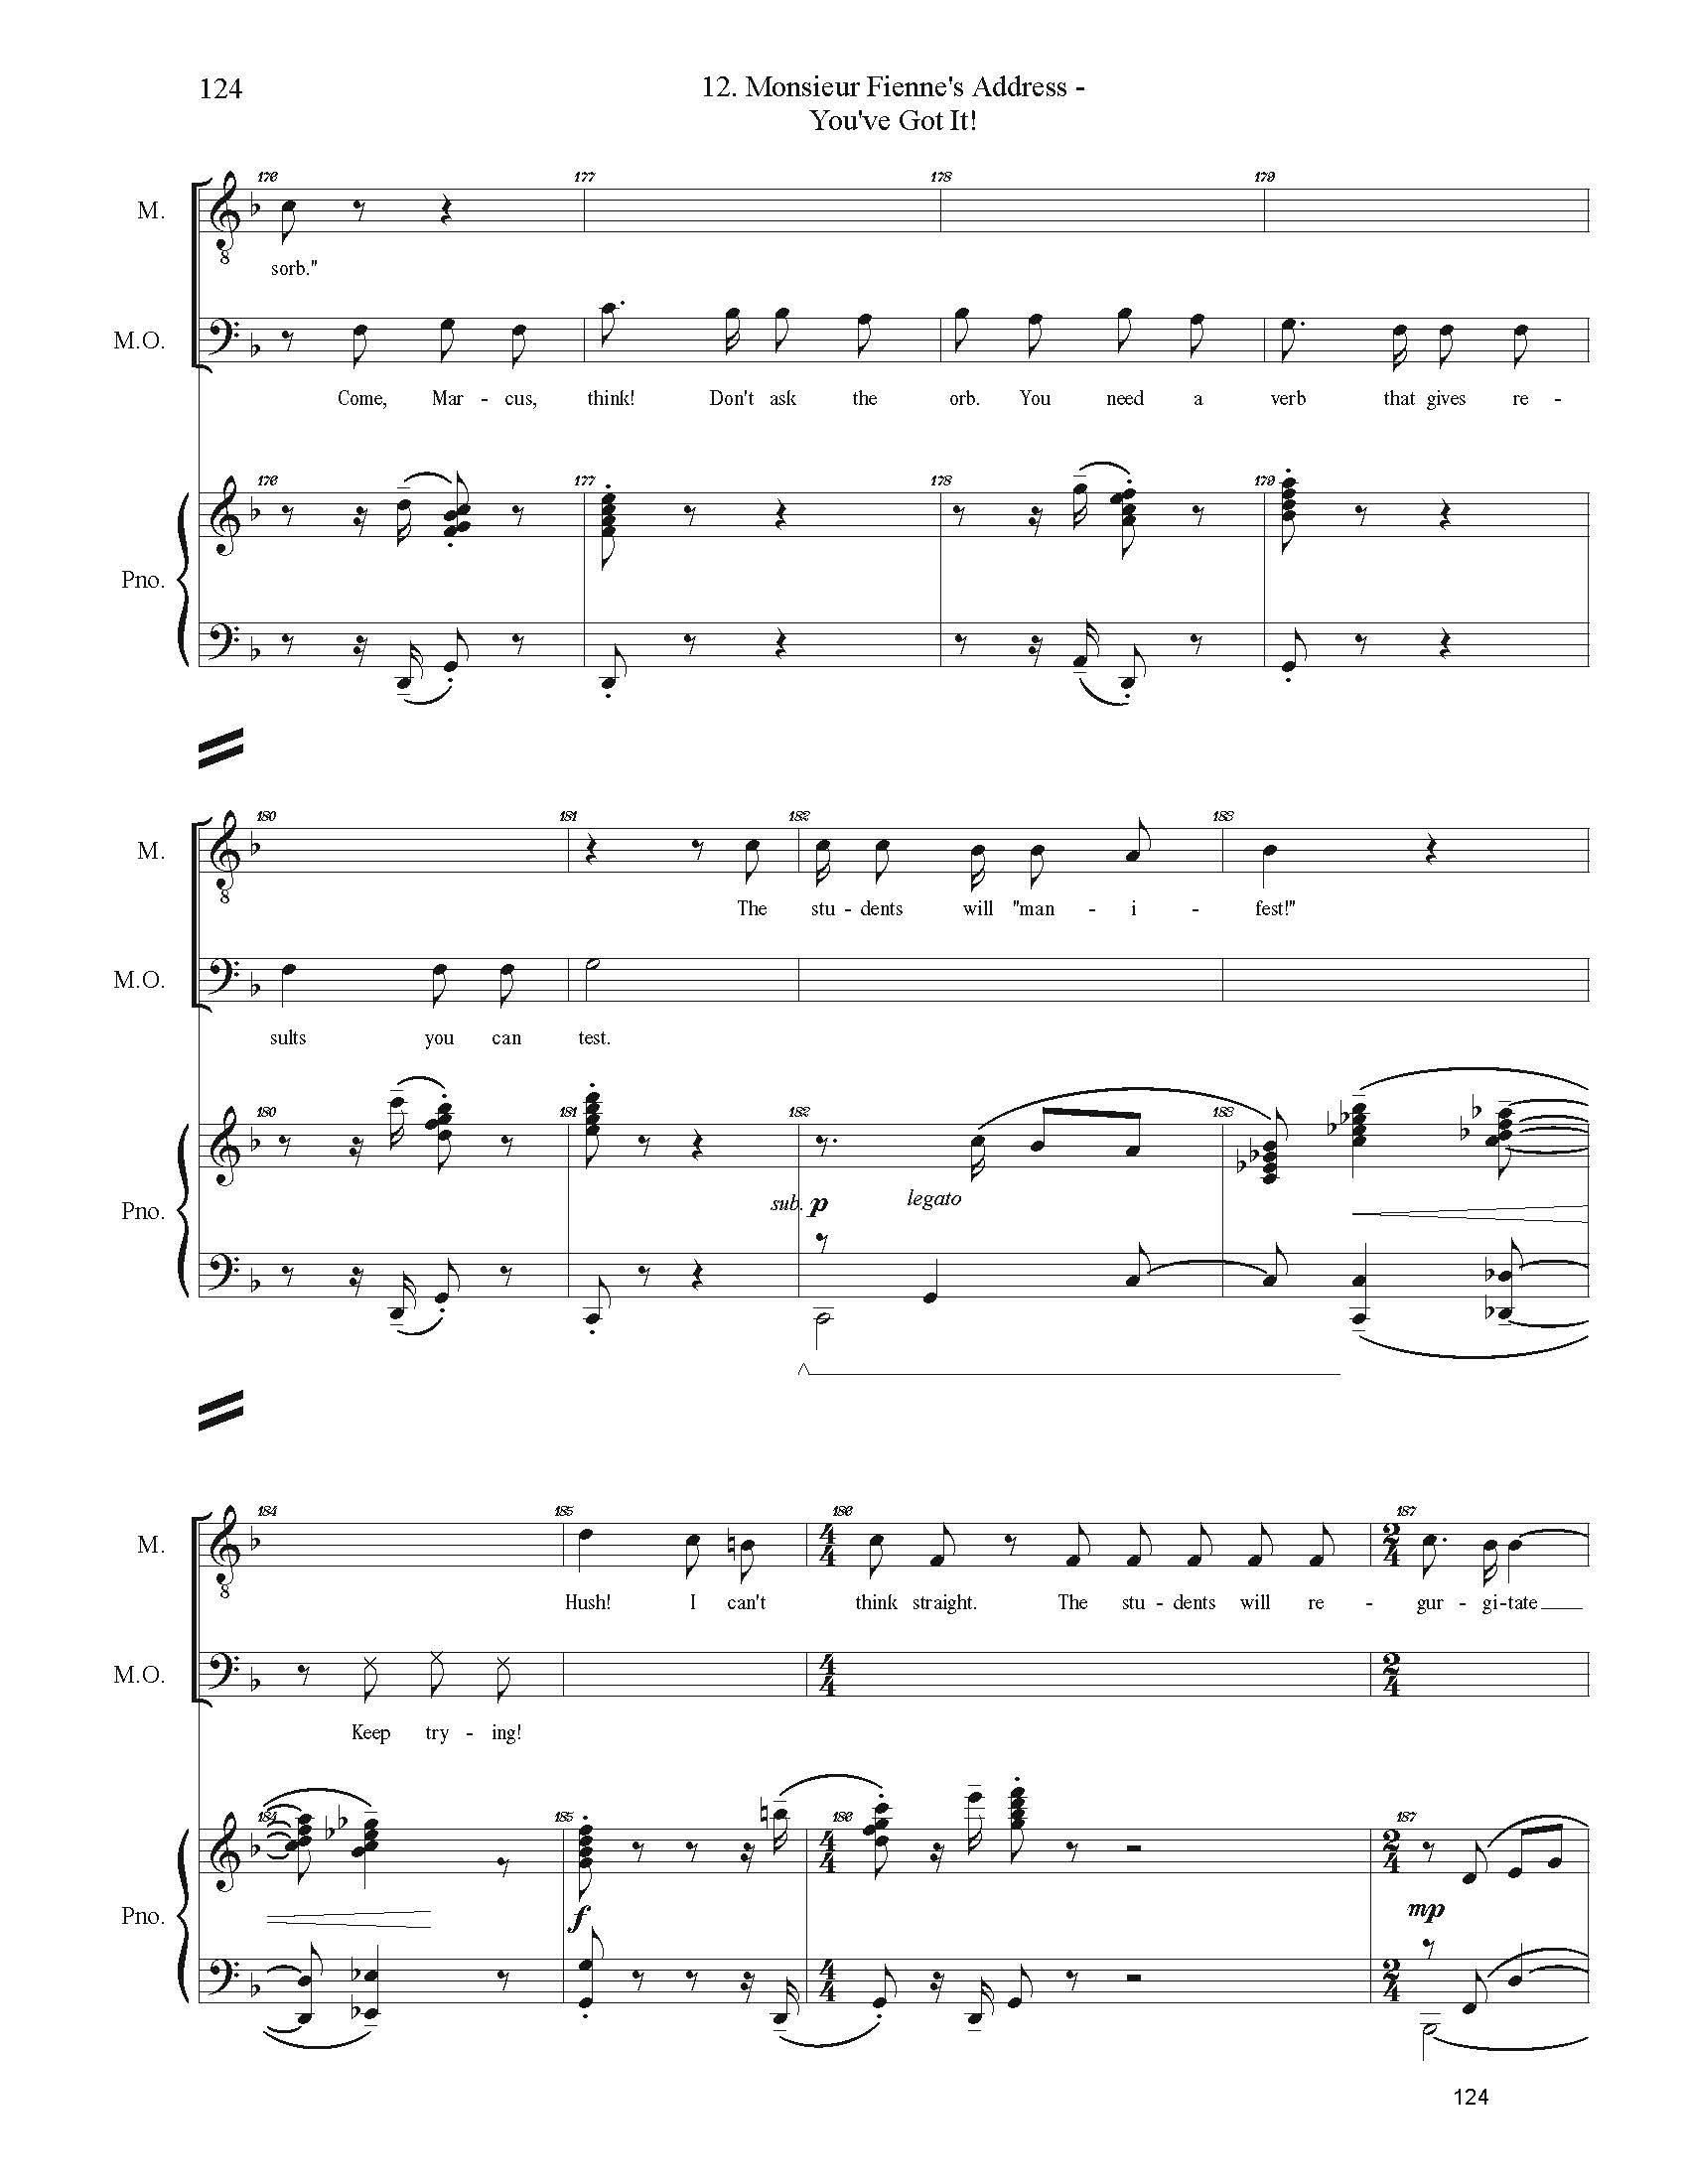 FULL PIANO VOCAL SCORE DRAFT 1 - Score_Page_124.jpg